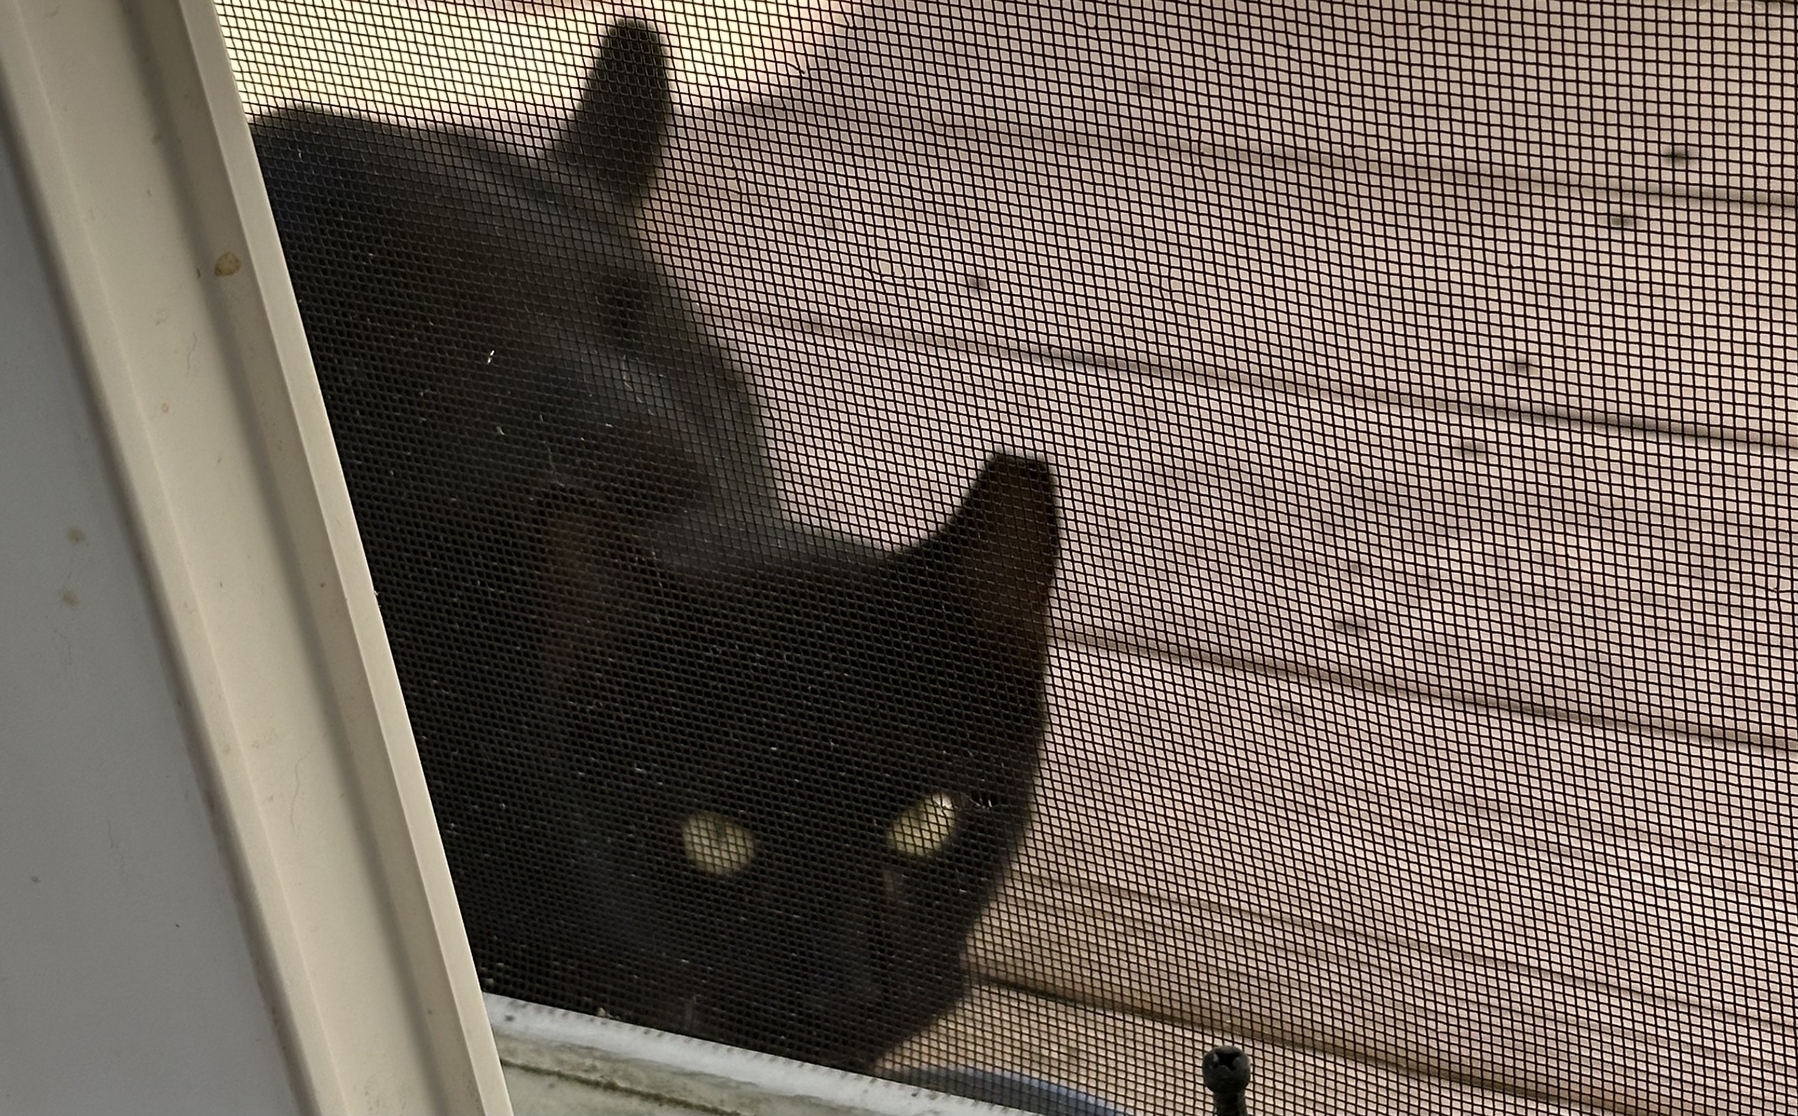 Black cat on deck 